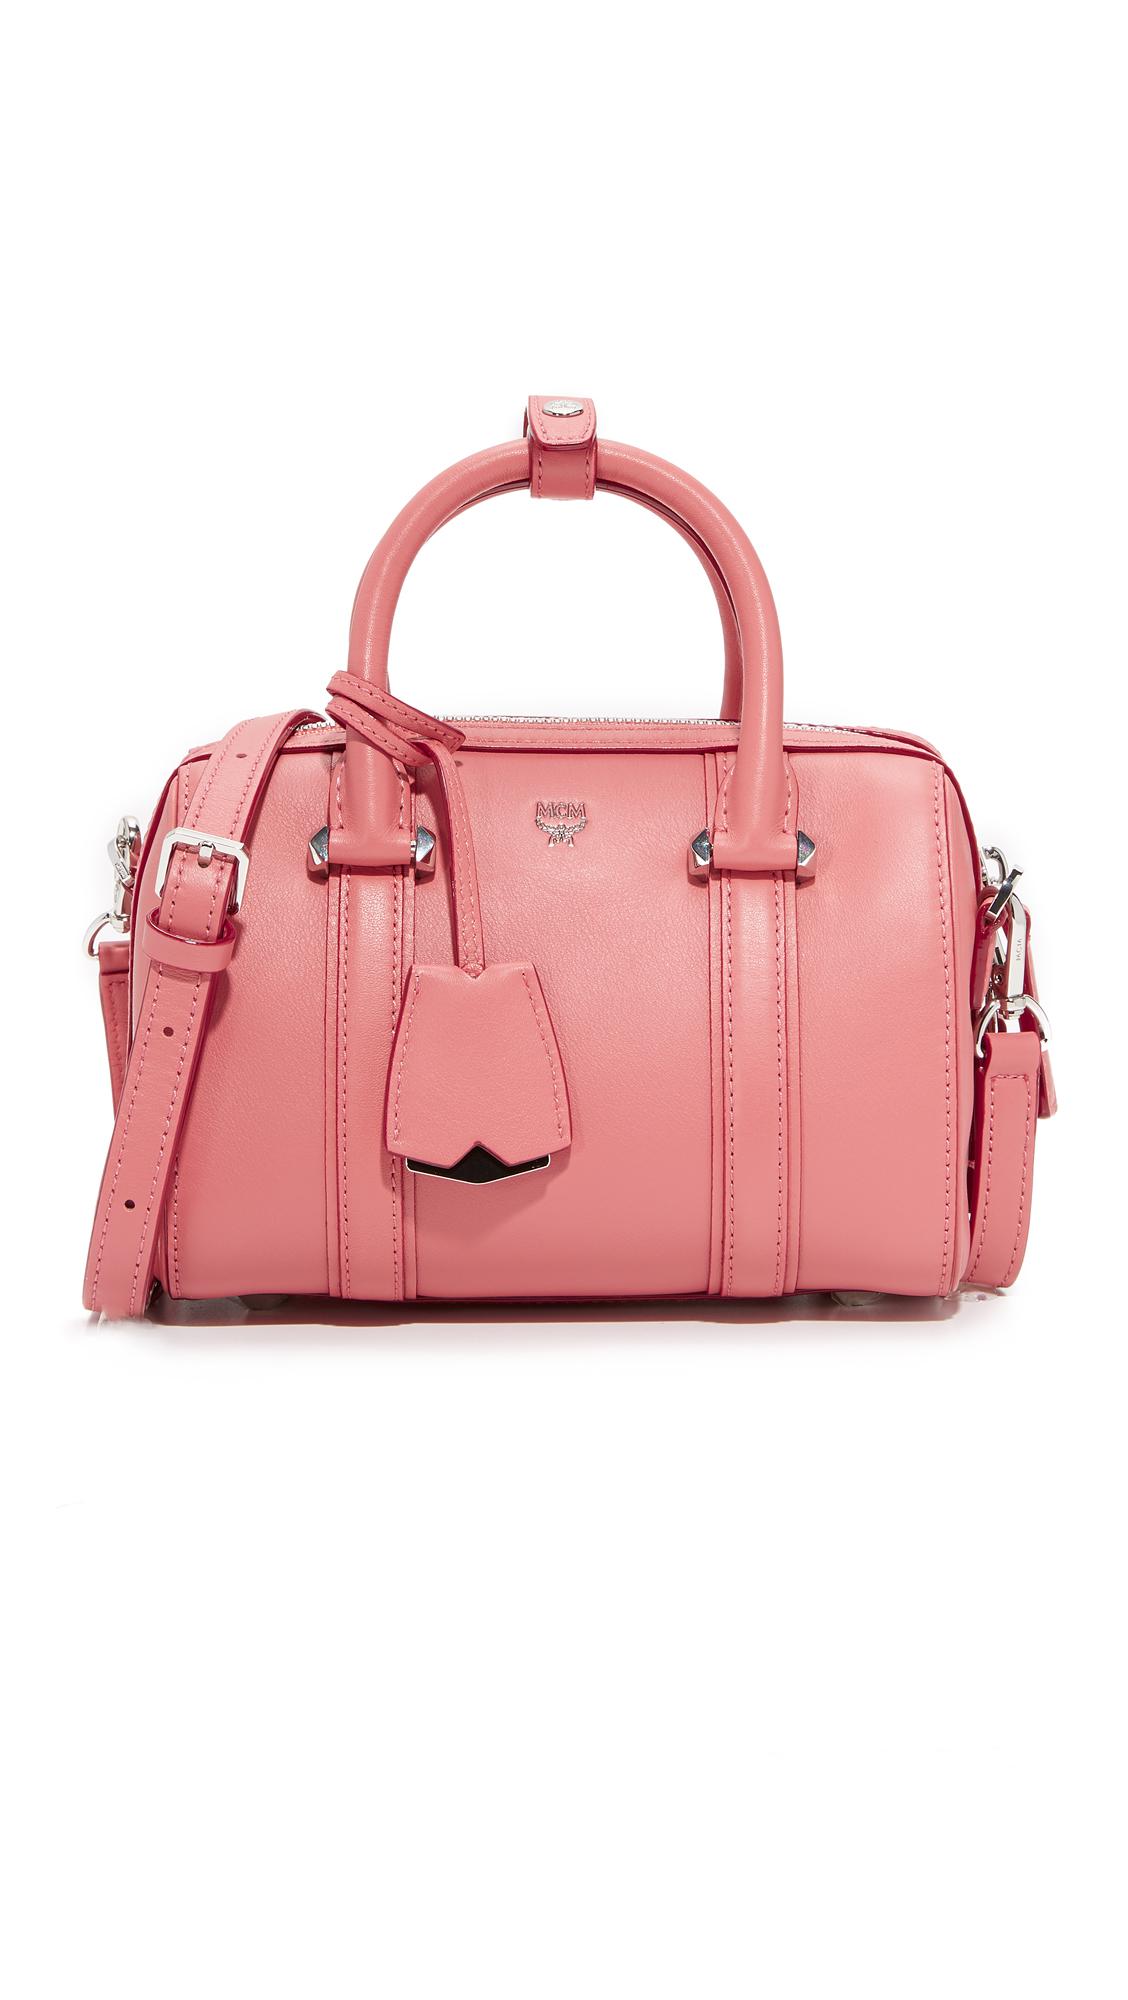 MCM Princess Lion Boston Bag - Pink Handle Bags, Handbags